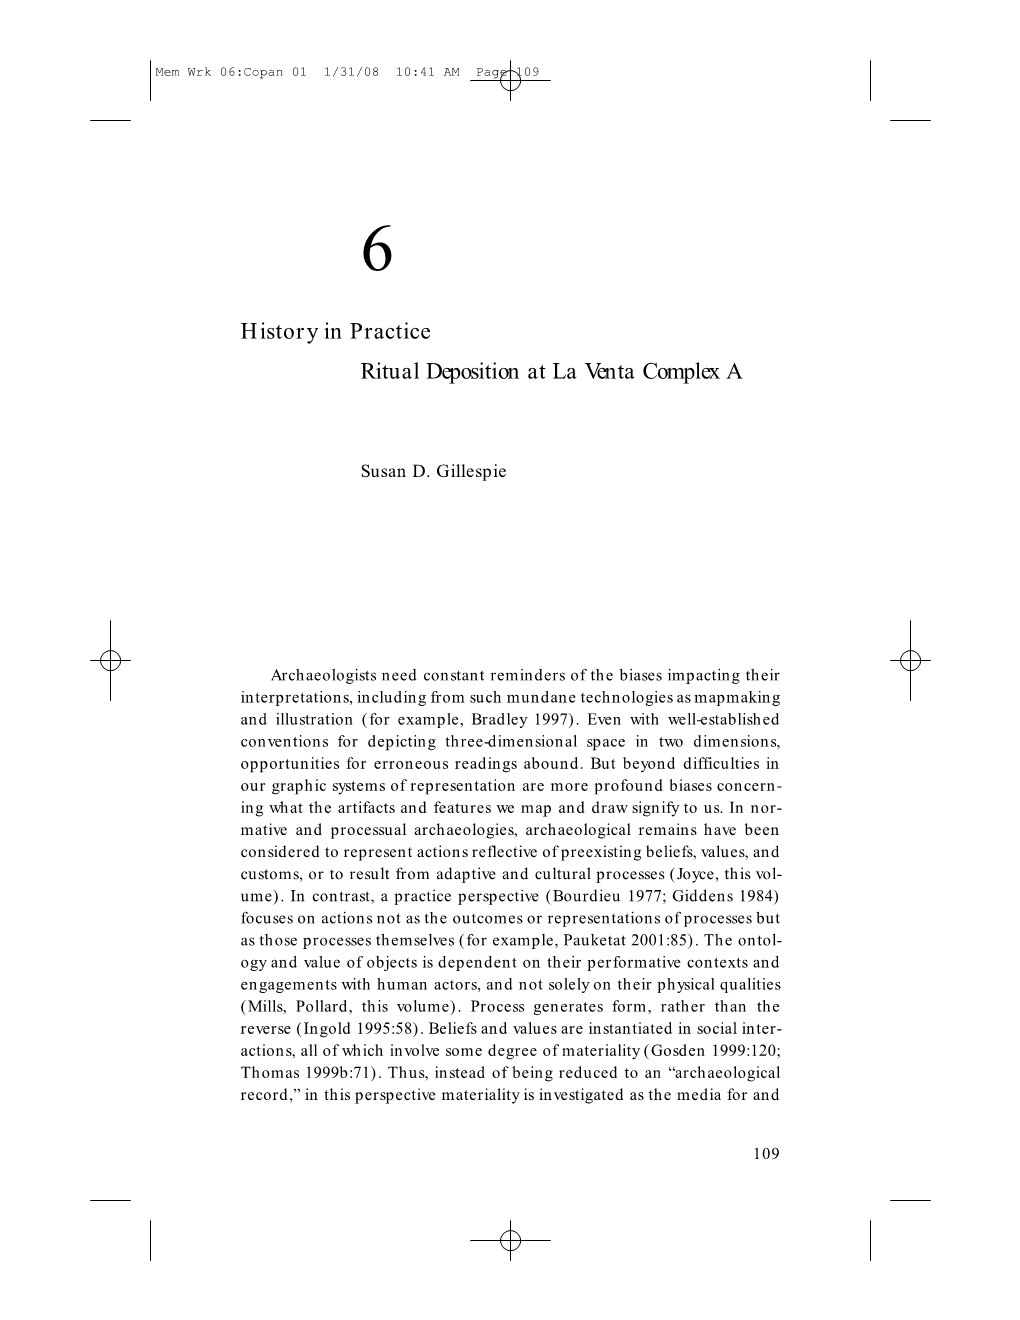 History in Practice Ritual Deposition at La Venta Complex A